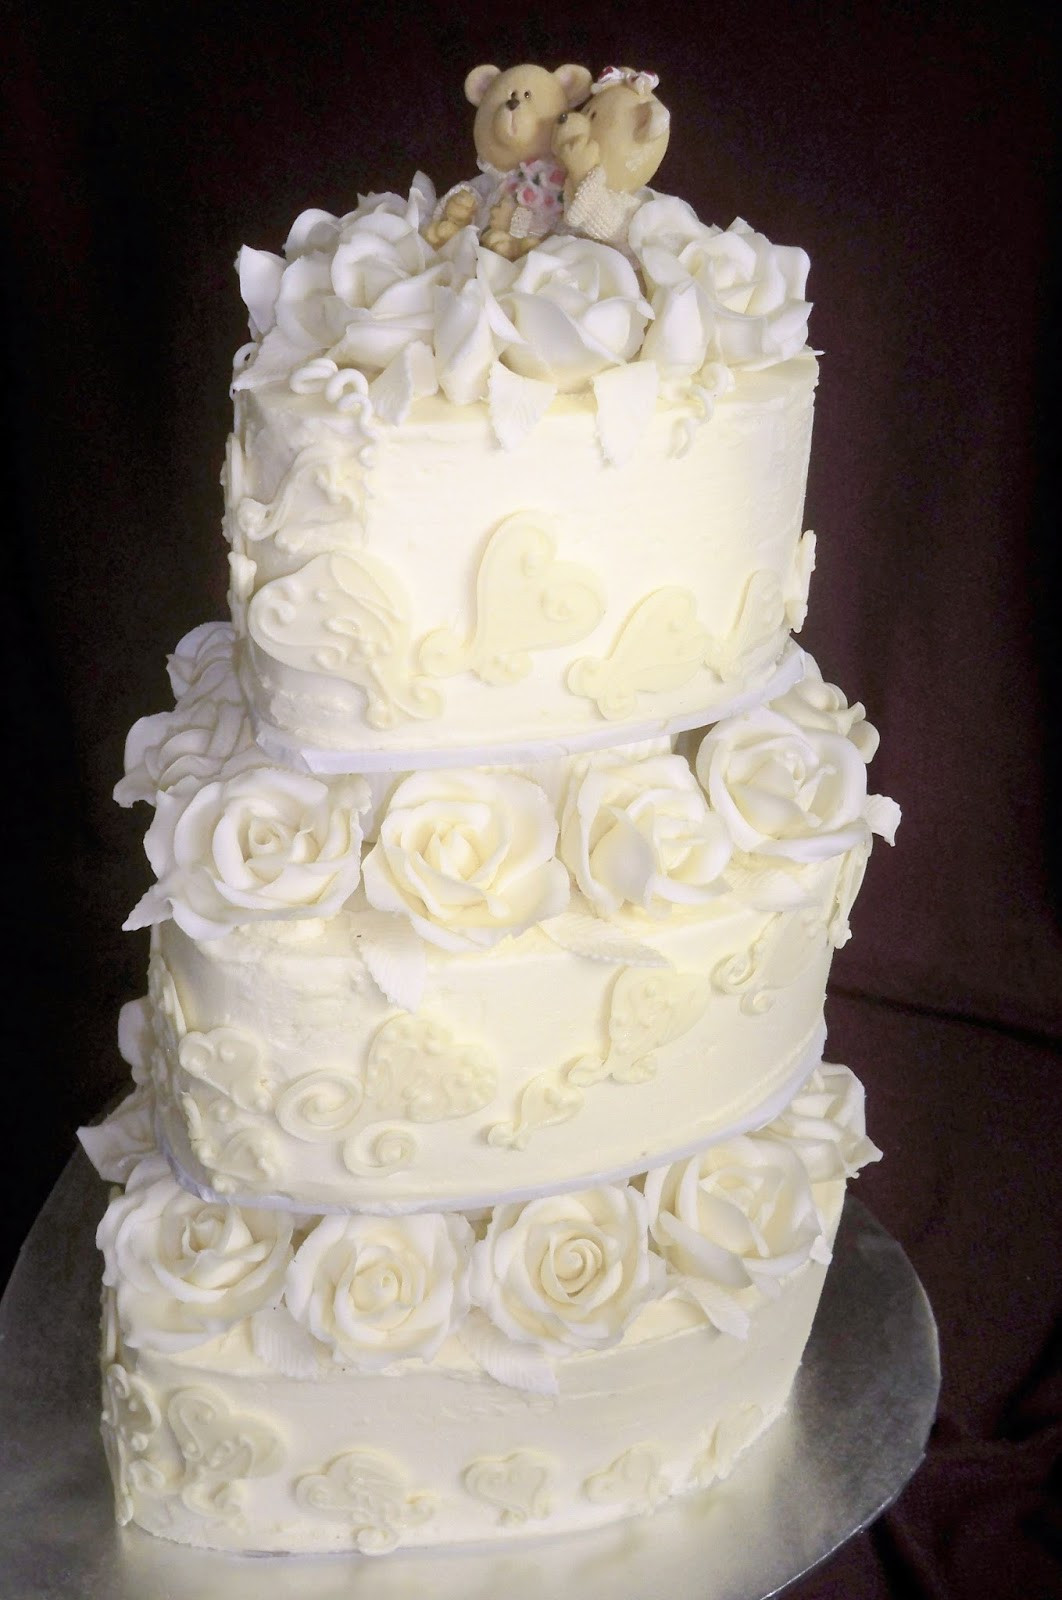 White And Chocolate Wedding Cake
 Romantic white chocolate wedding cake